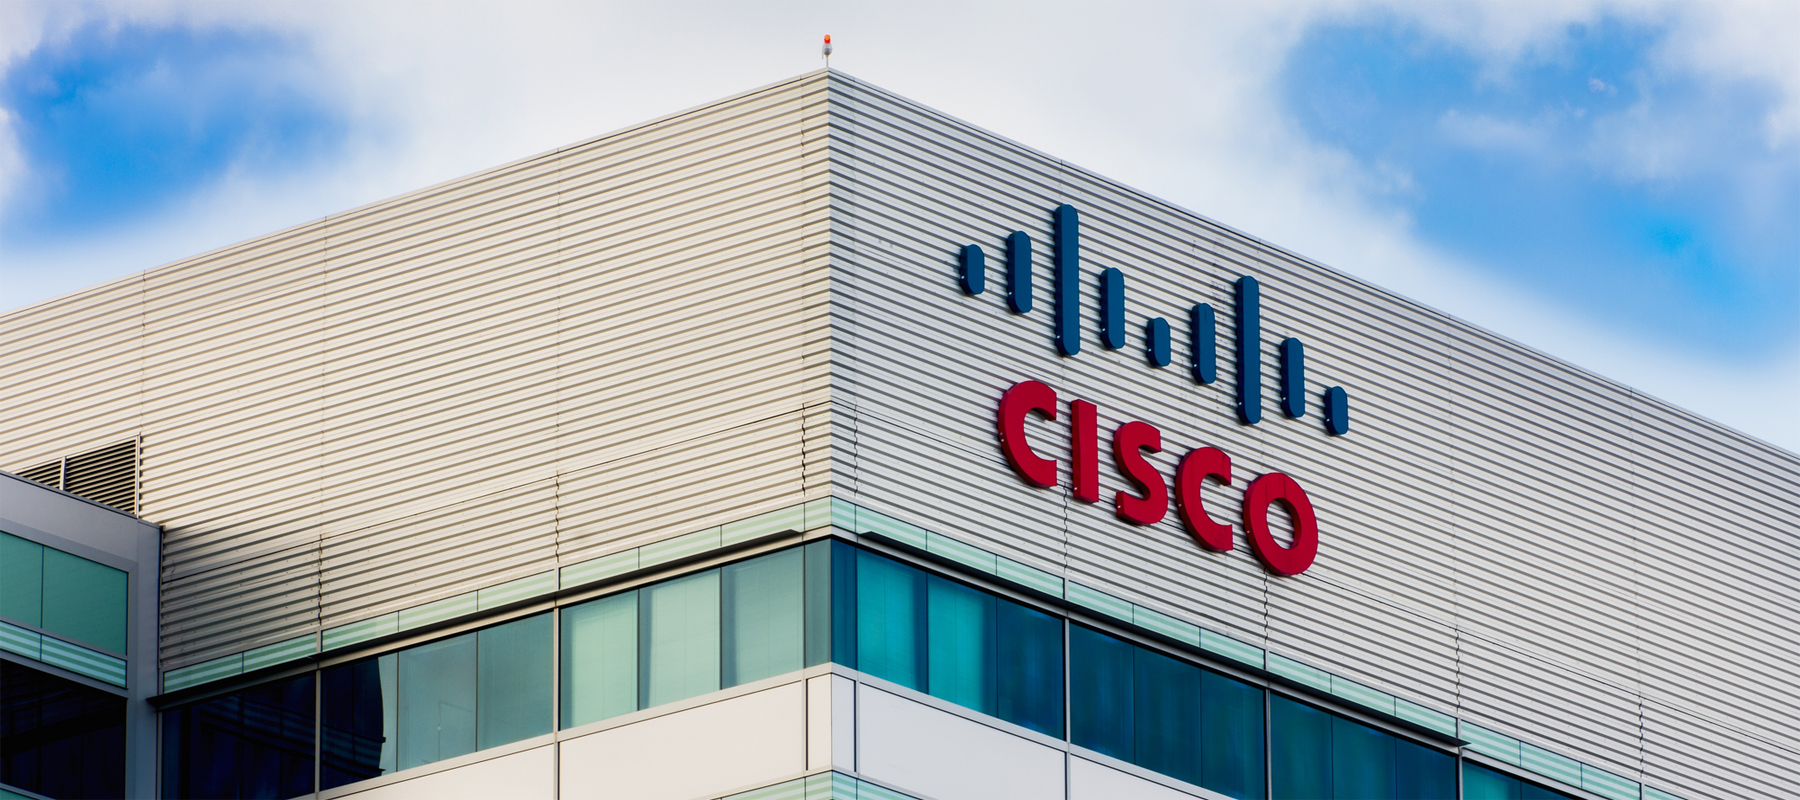 Cisco's Logo on their Building